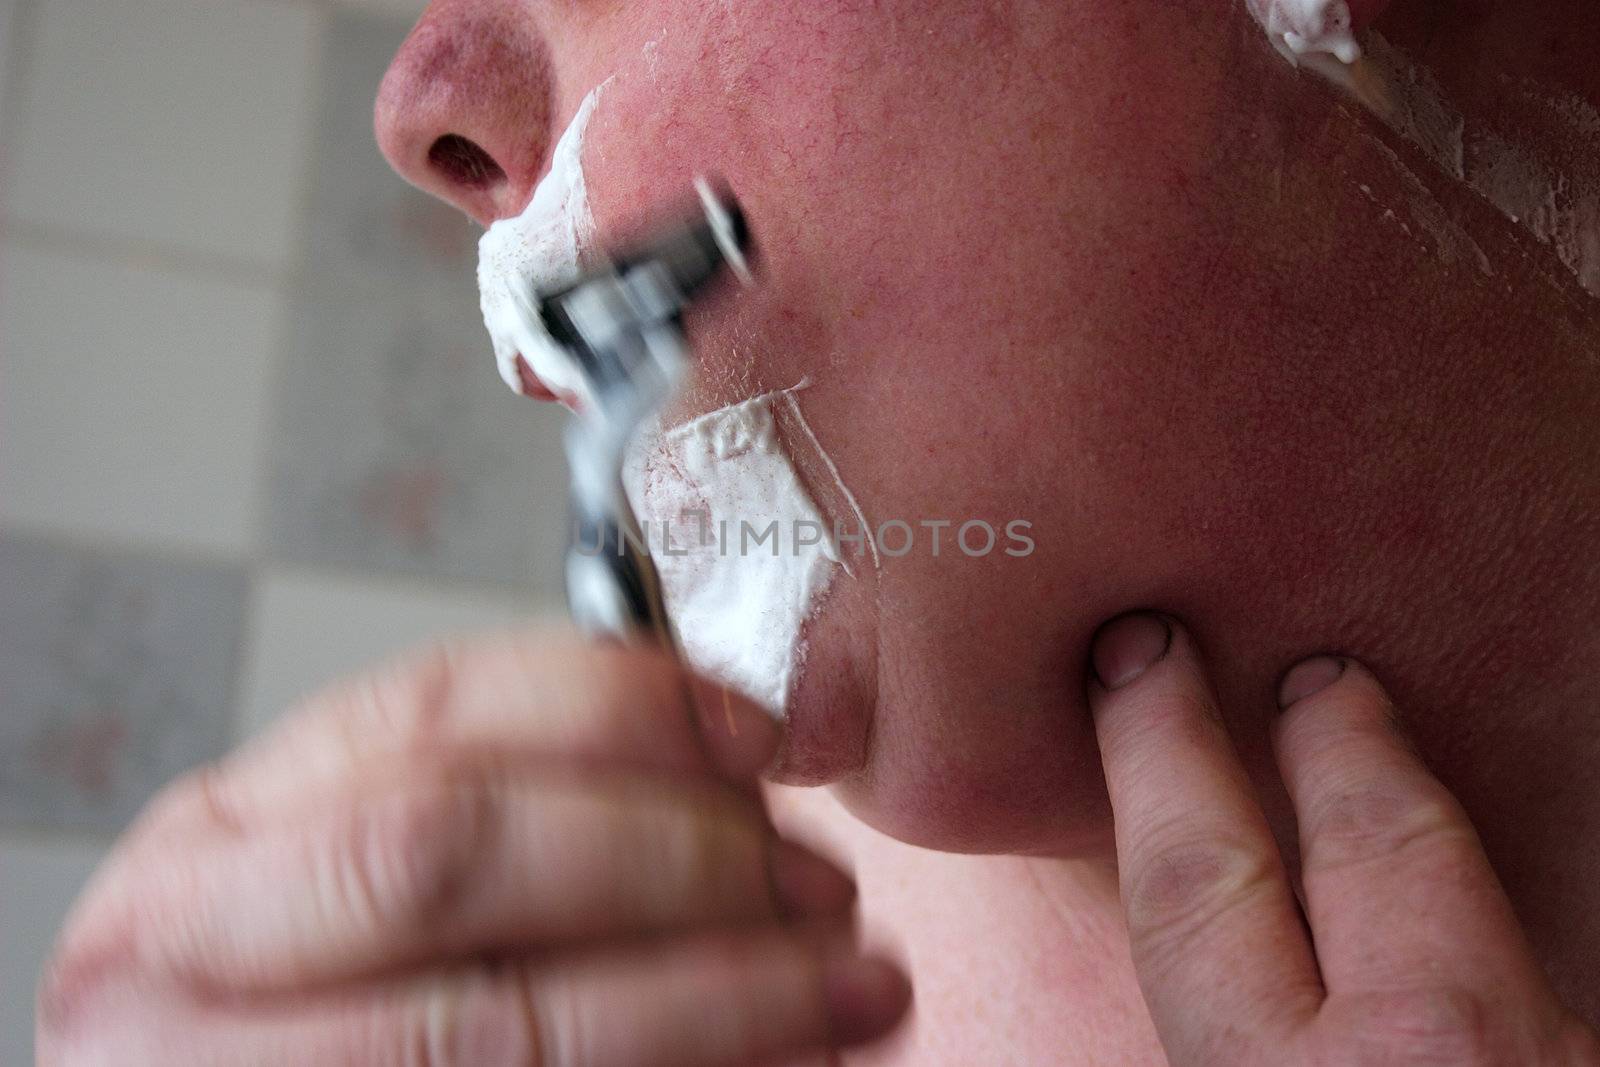 man shaving showing the movement of the razor